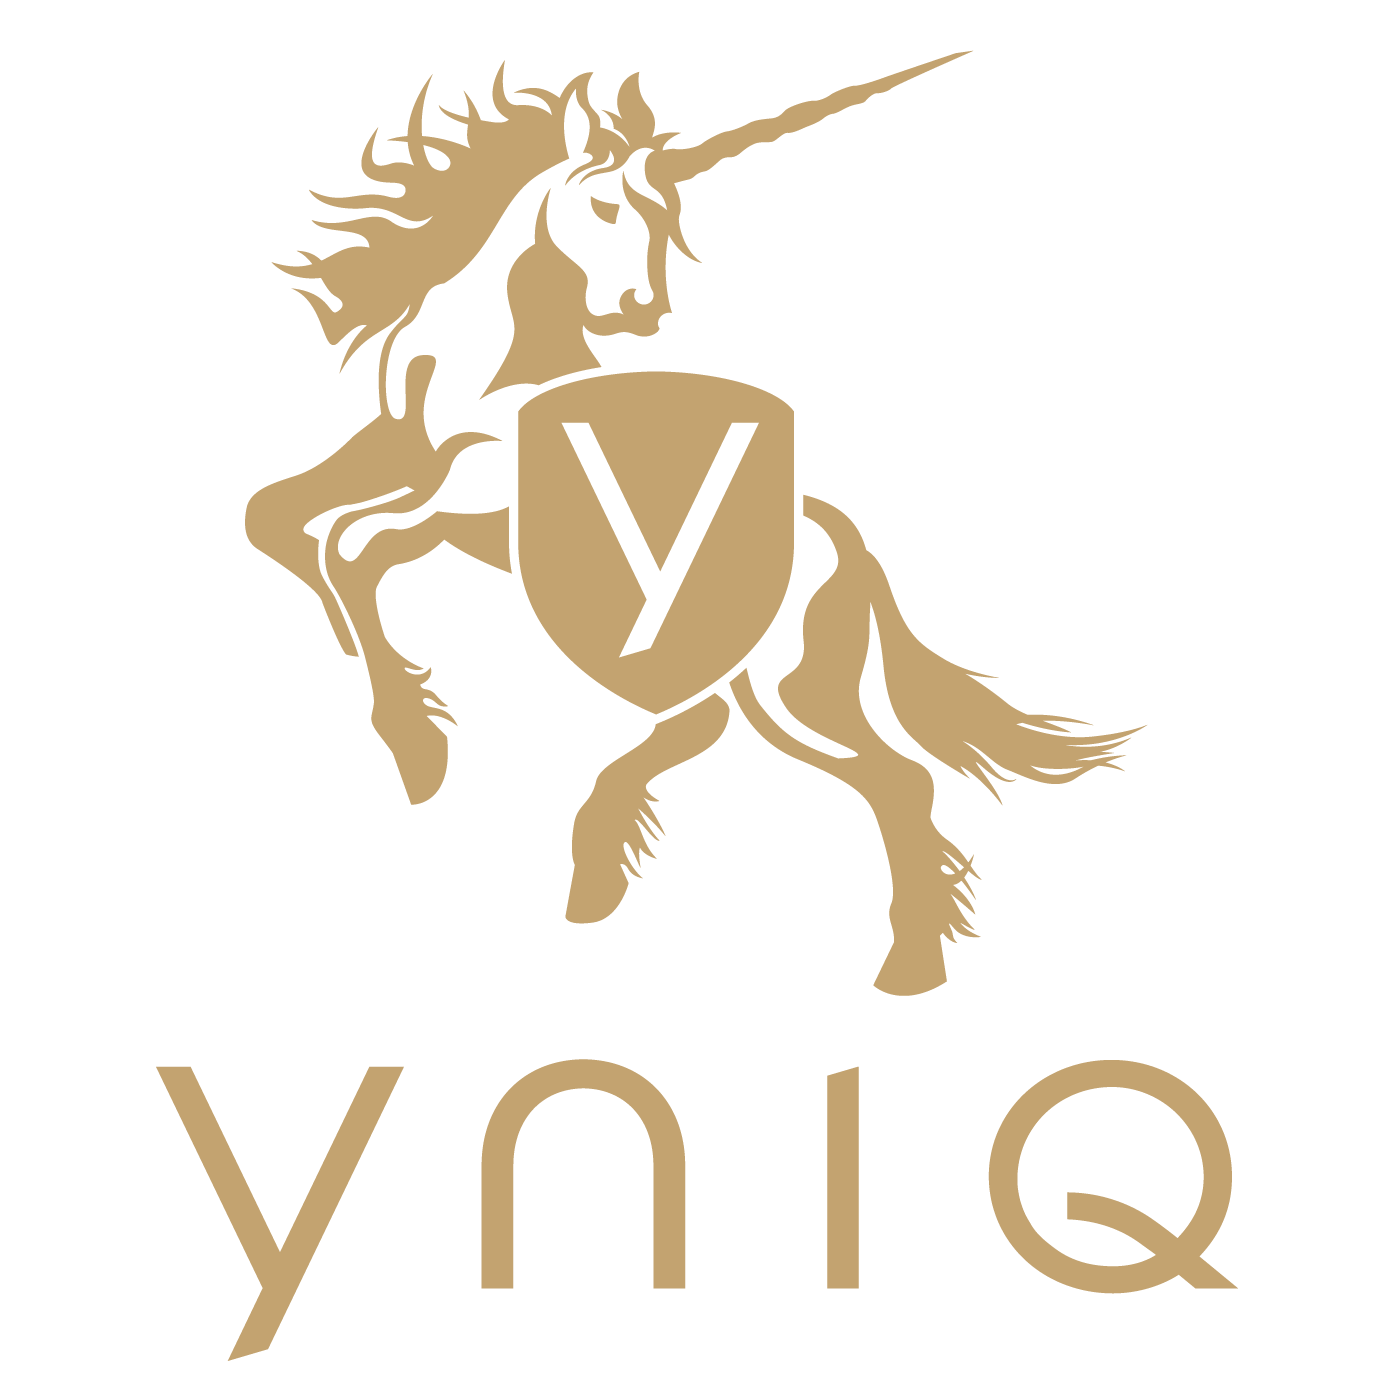 Yniq – Branded State